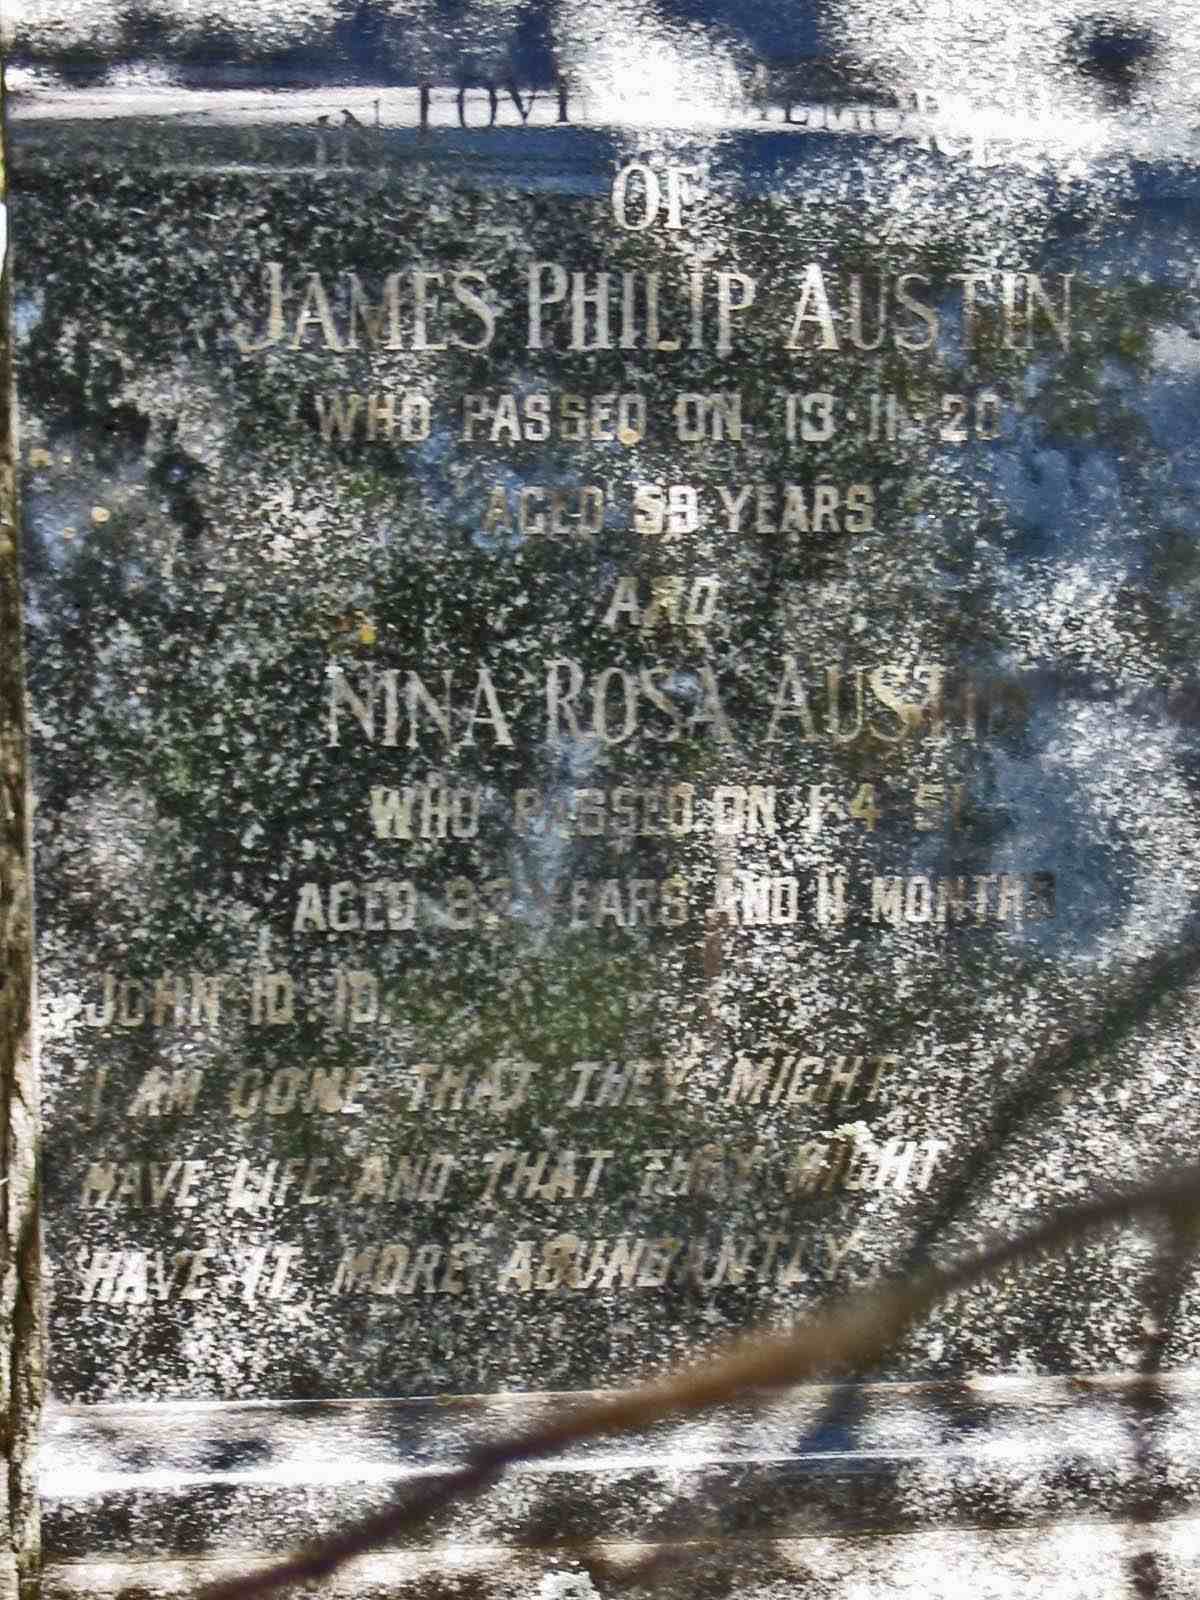 AUSTIN James Phillip -1920 & Nina Rosa -1951